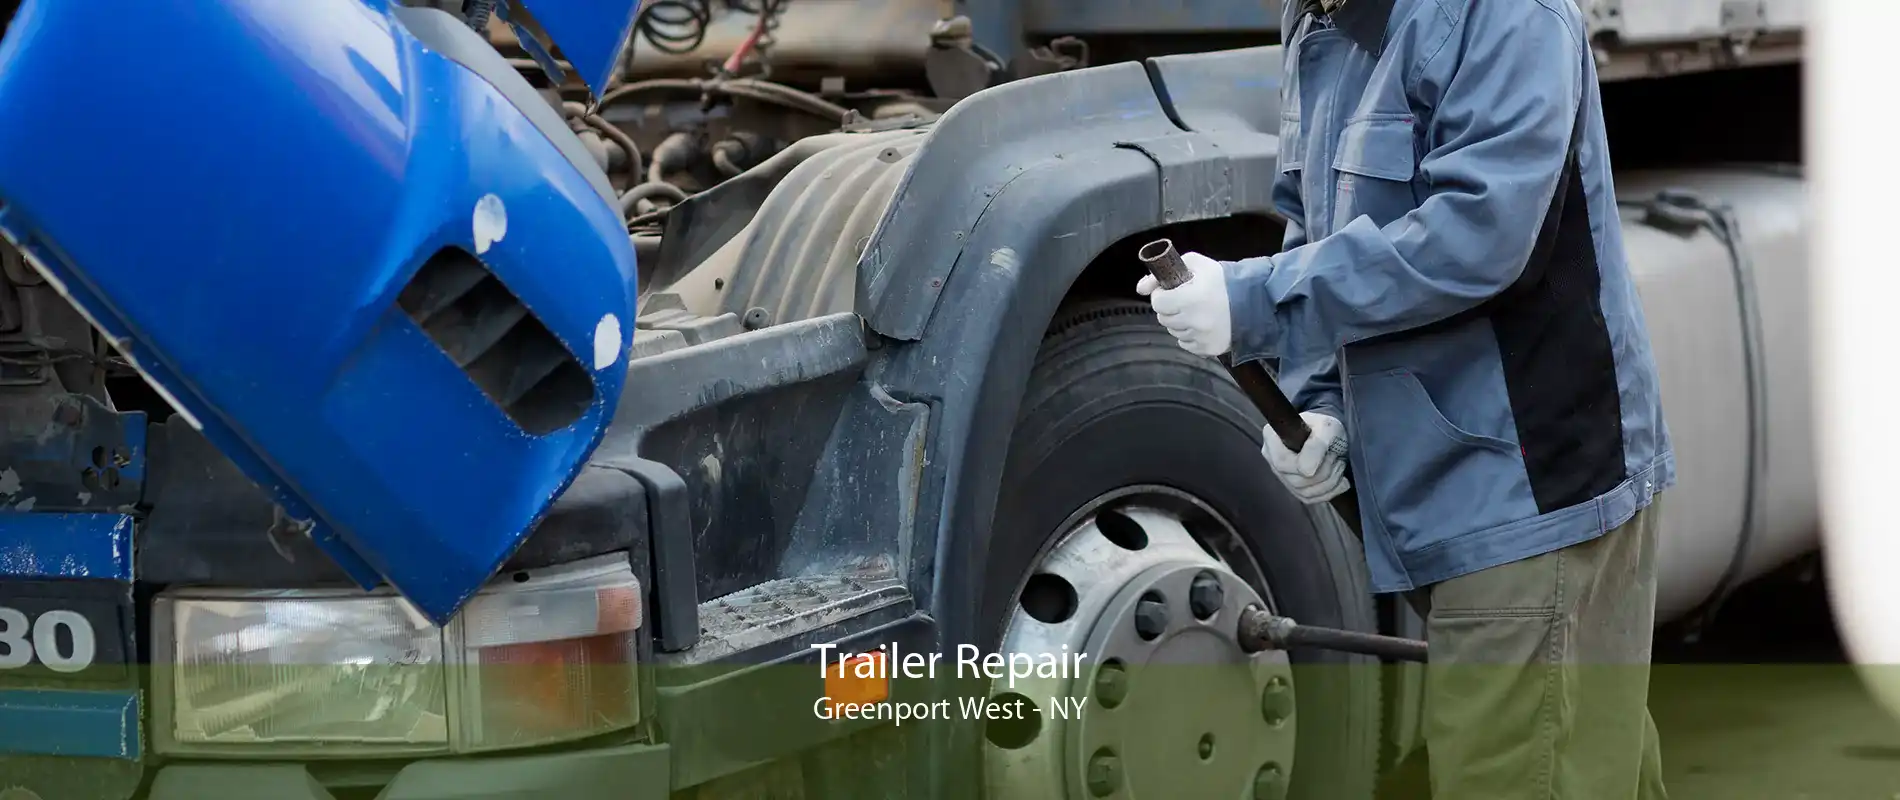 Trailer Repair Greenport West - NY